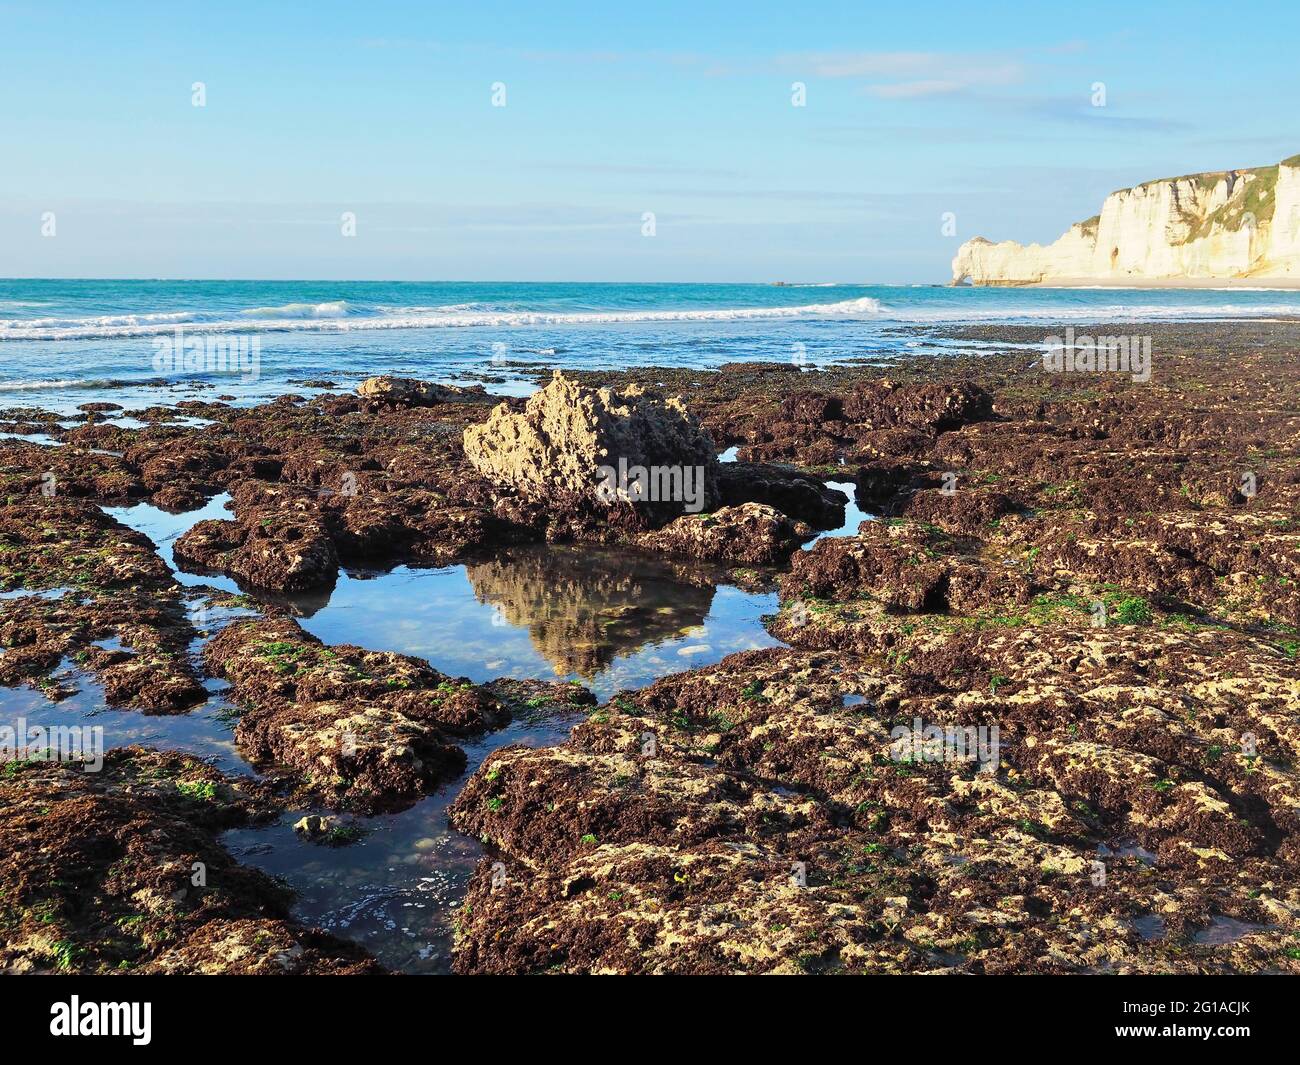 Low tide has exposed stone sea bottom, Etretat, France Stock Photo